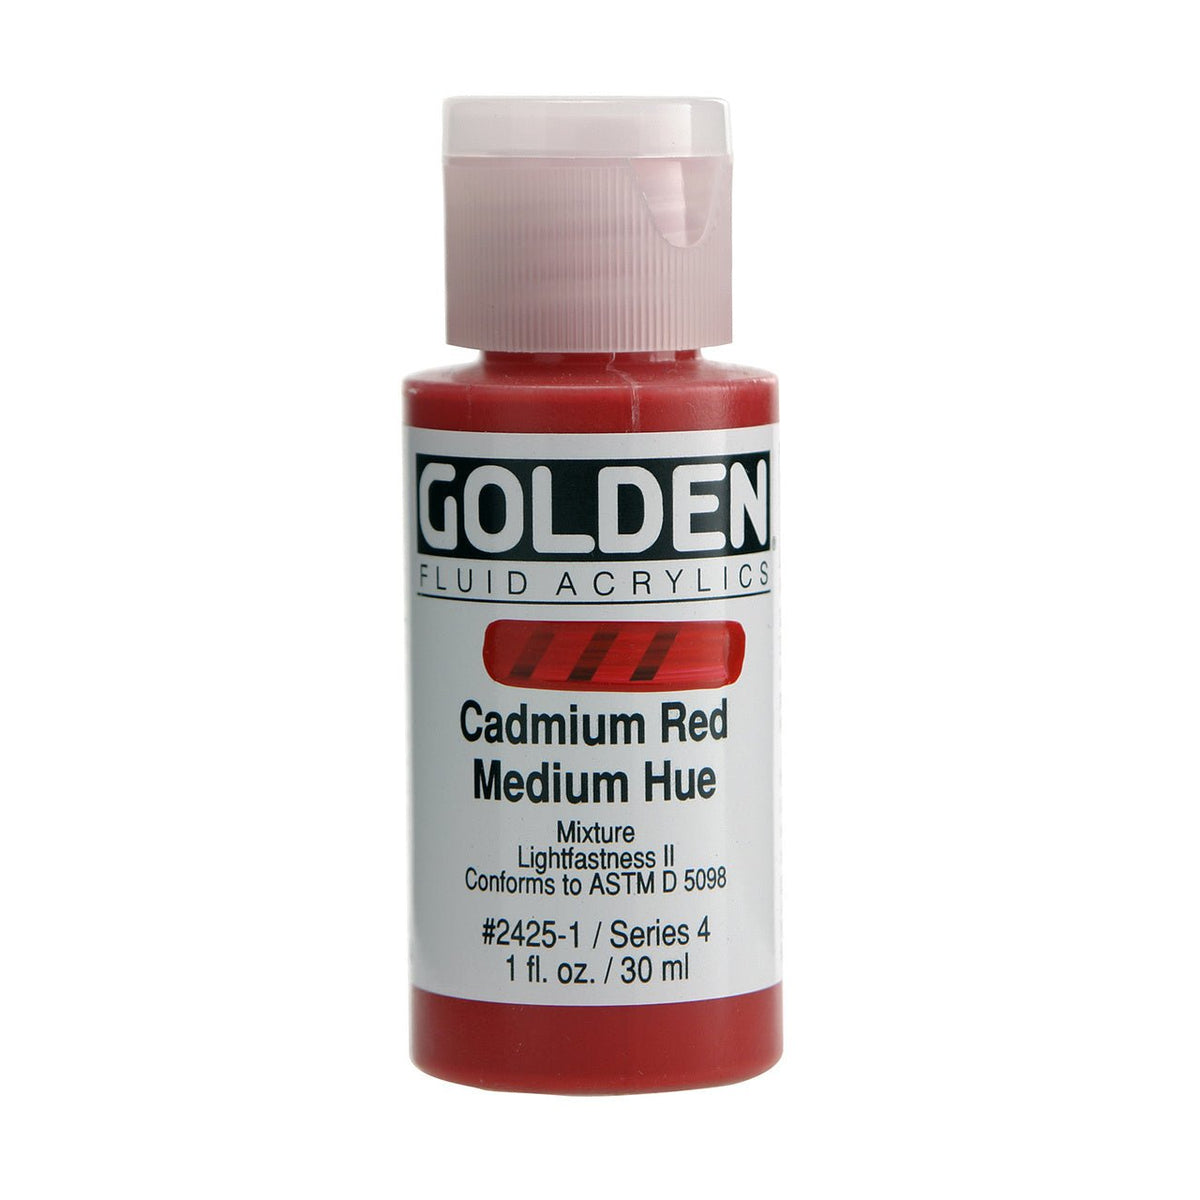 Golden Fluid Acrylic Cadmium Red Medium Hue 1 oz - merriartist.com